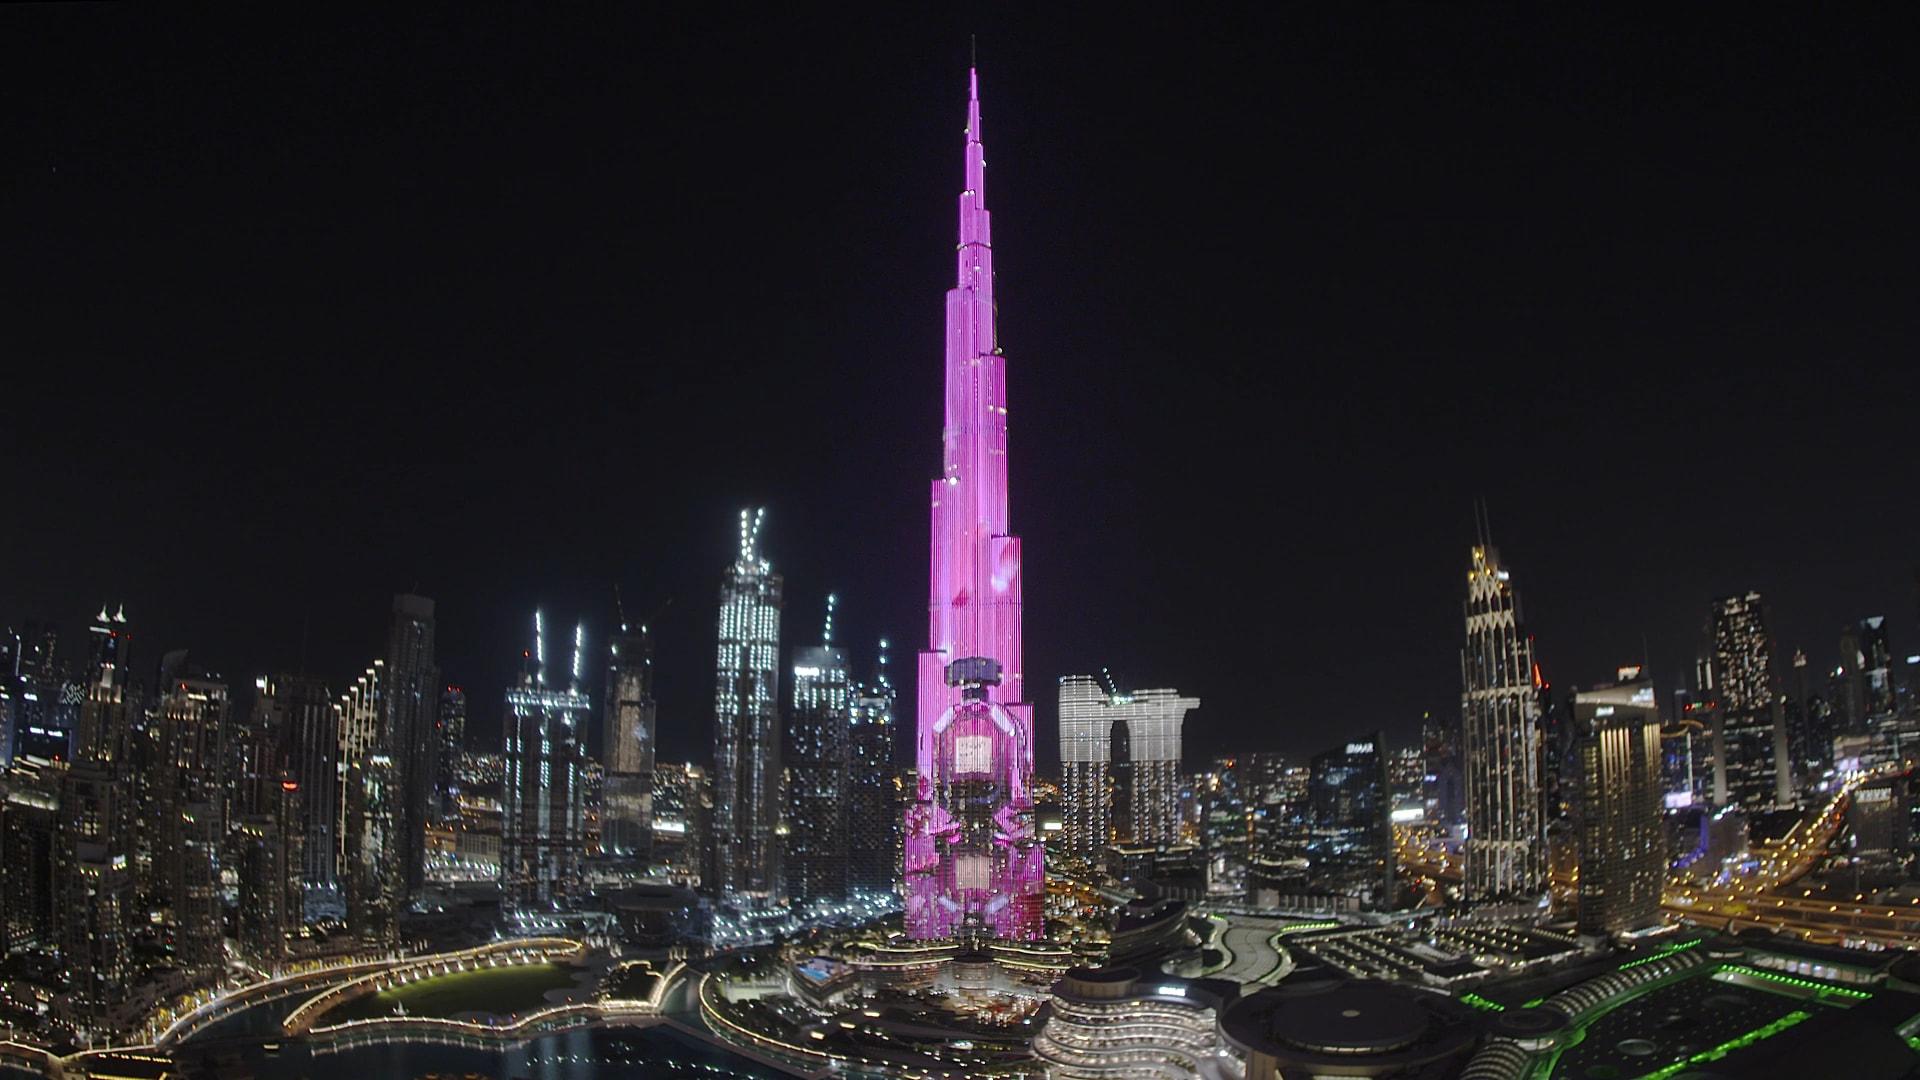 A sense-ational new fragrance was launched on Burj Khalifa last night